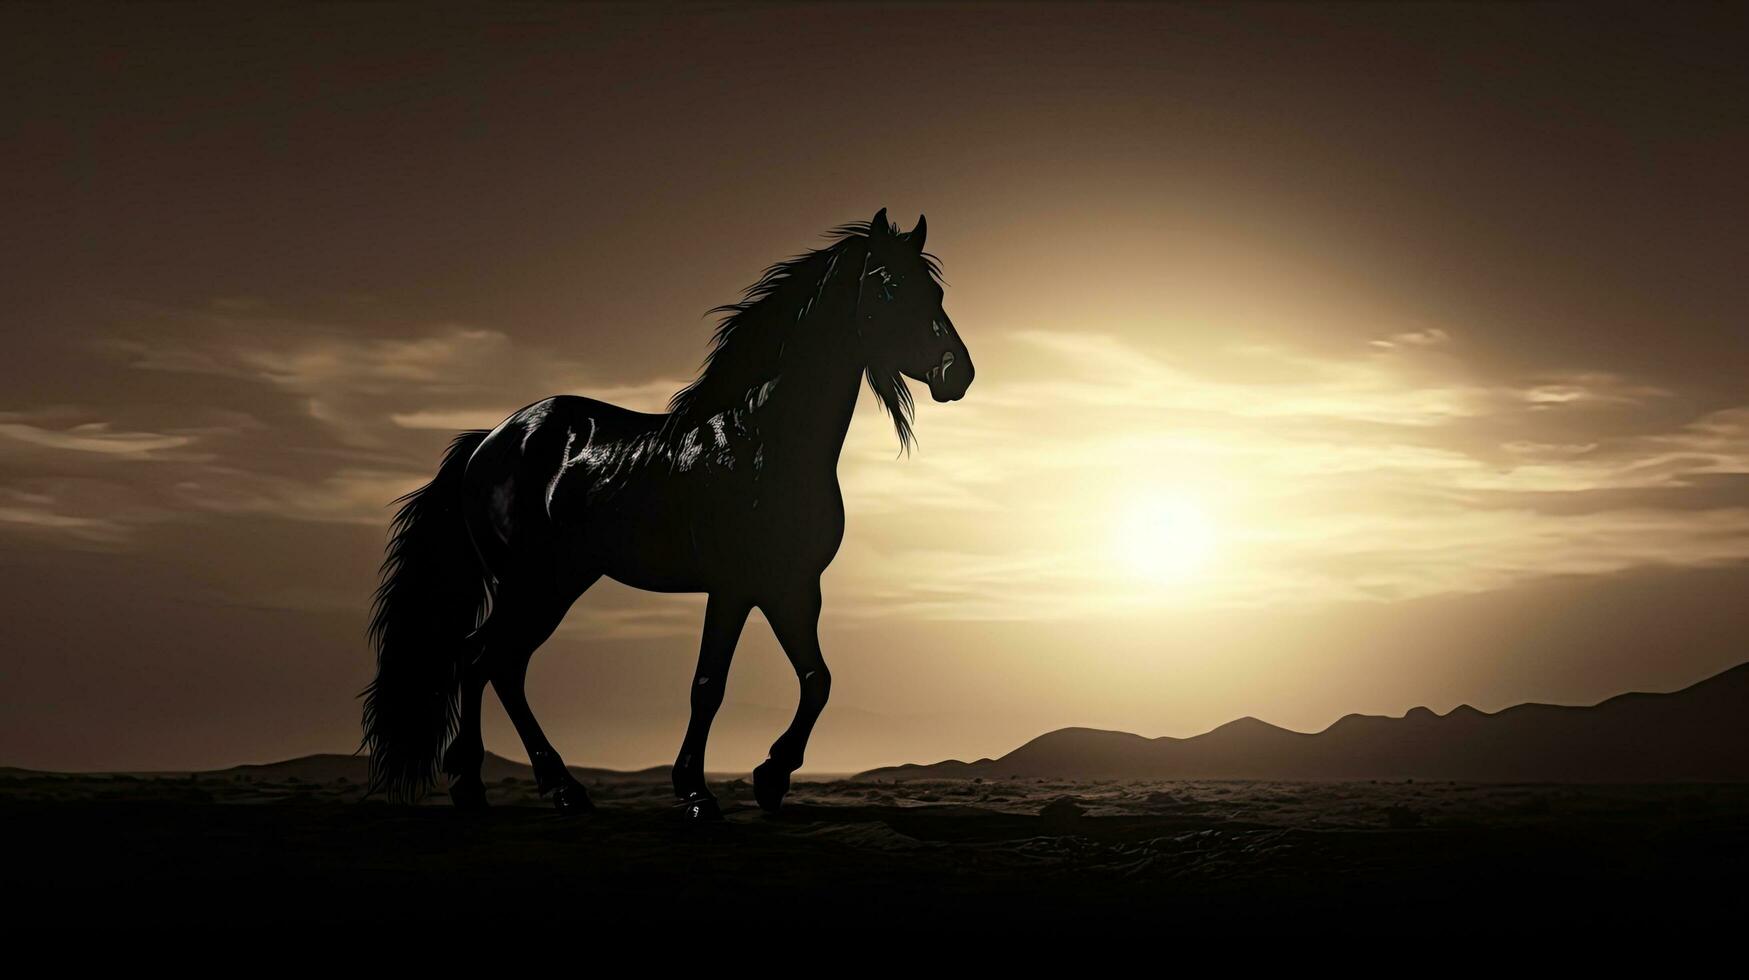 Arabian horse silhouette against sunrise in black and white photo